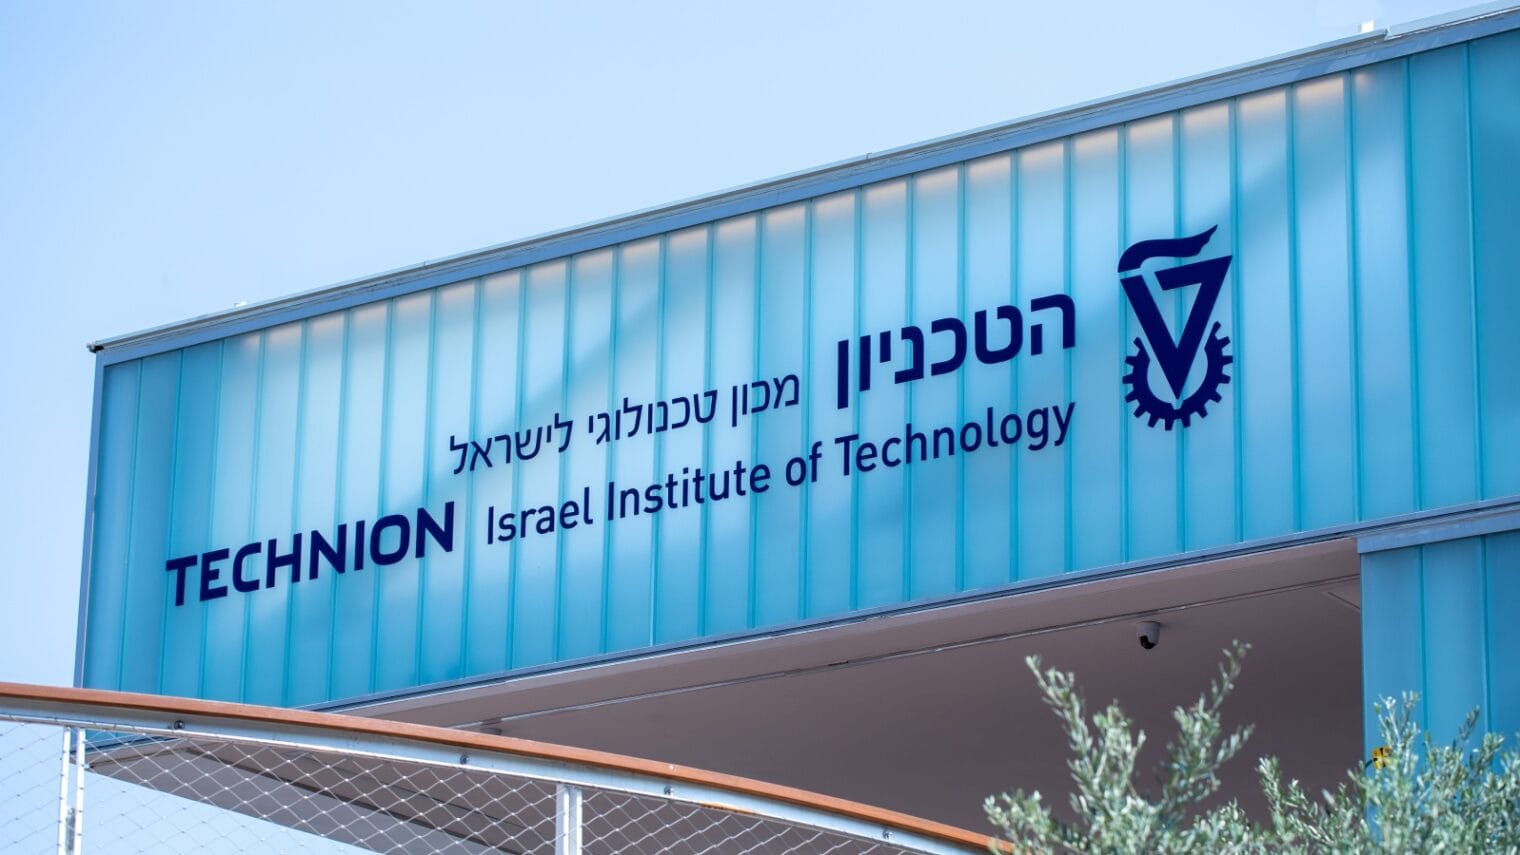 The Technion-Israel Institute of Technology. Photo by Magio reStock via Shutterstock.com